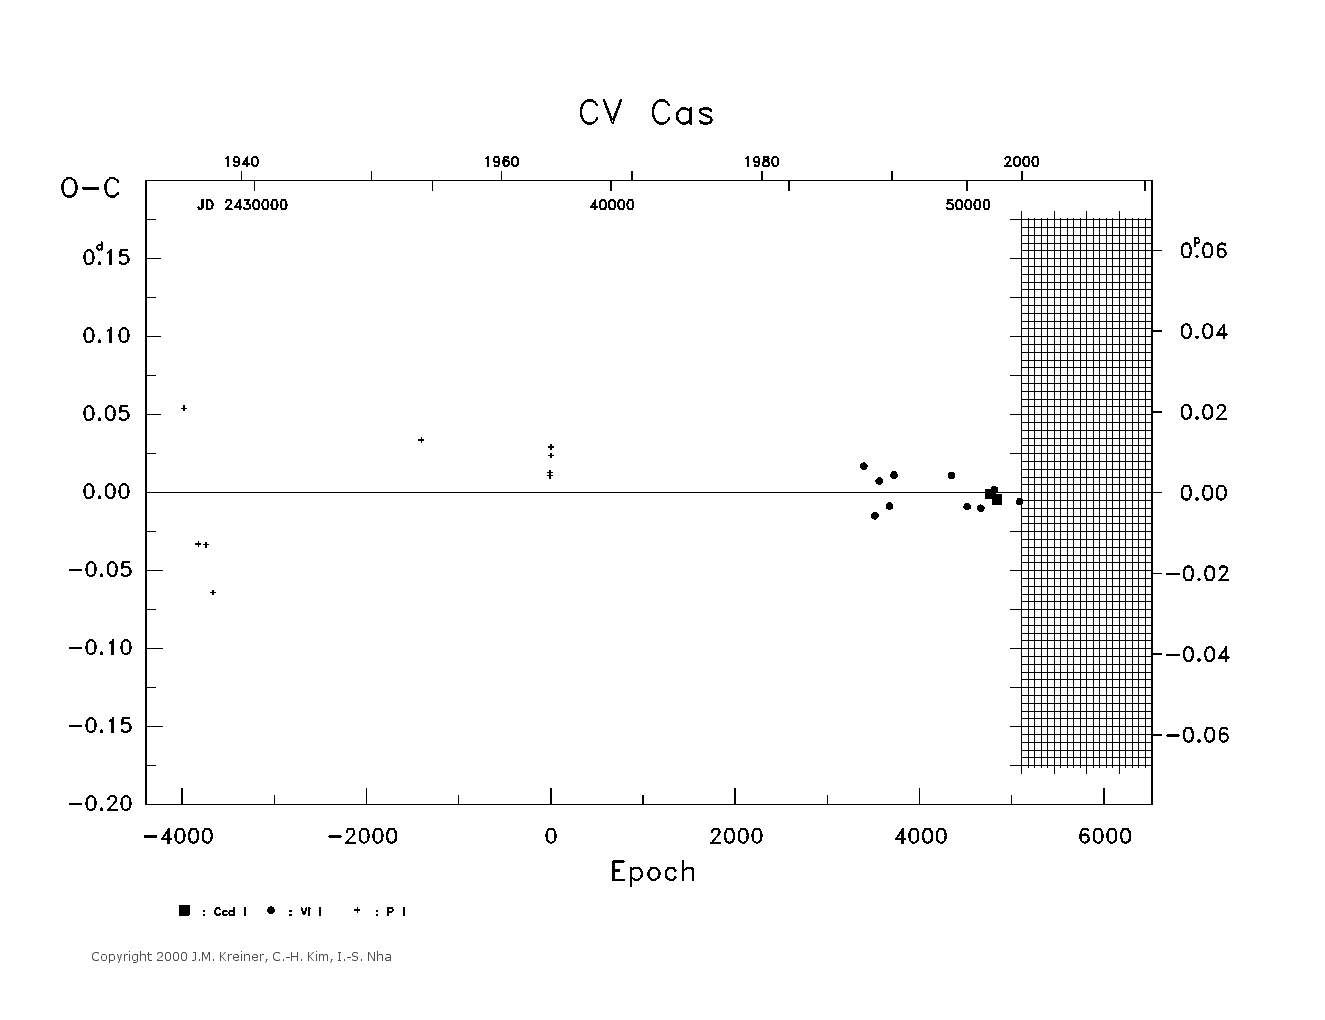 [IMAGE: large CV CAS O-C diagram]